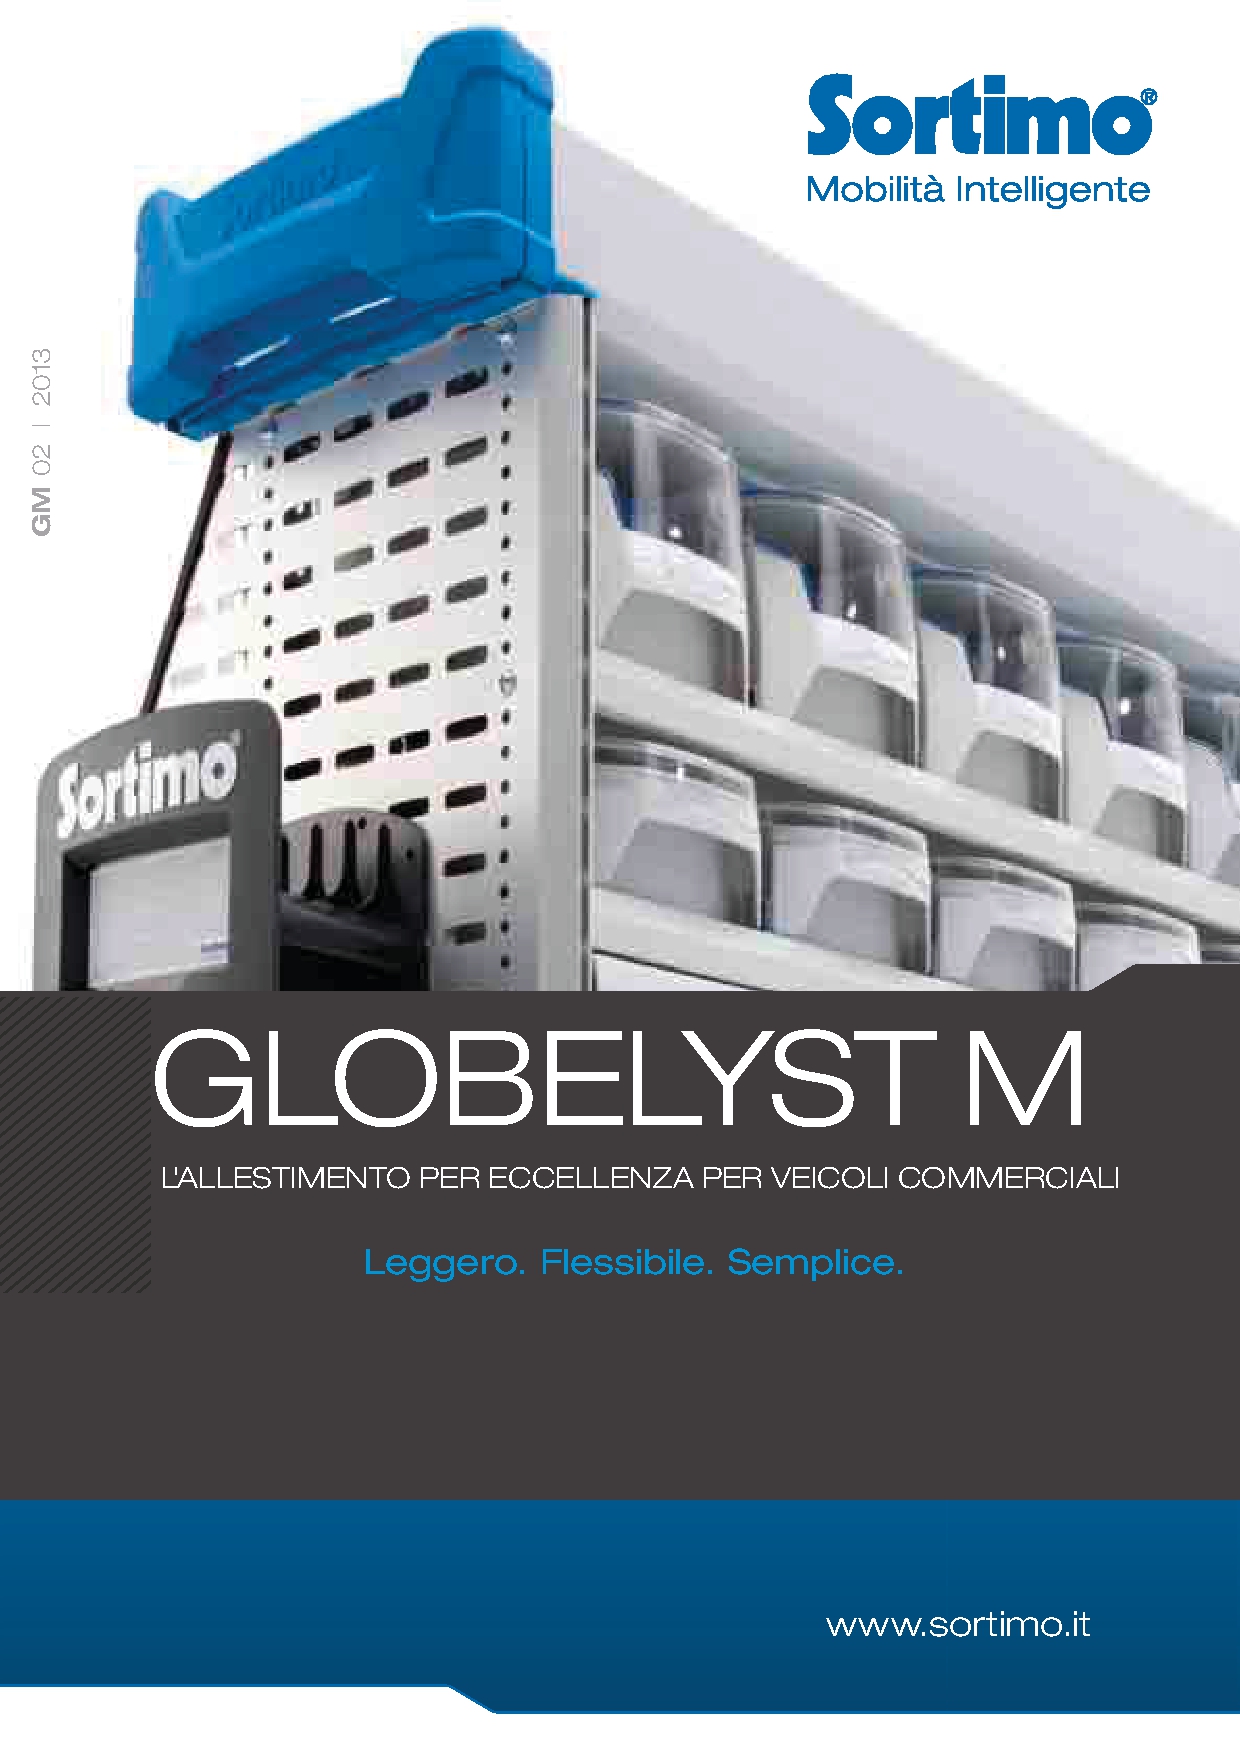 Globelyst M